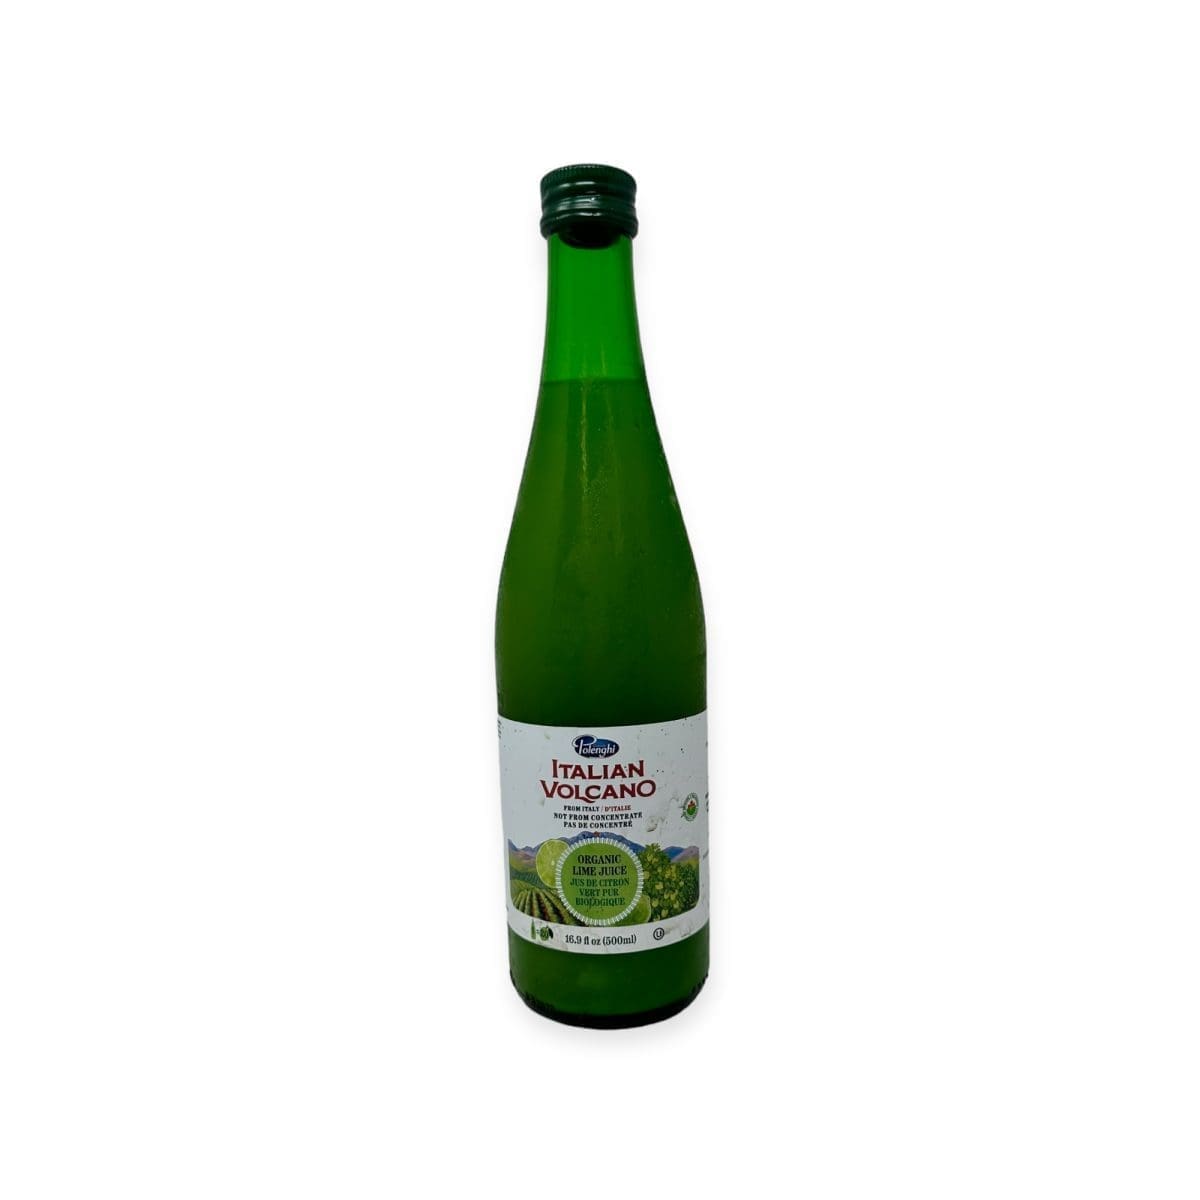 Polenghi Italian Valcano Lime Juice (500mL)